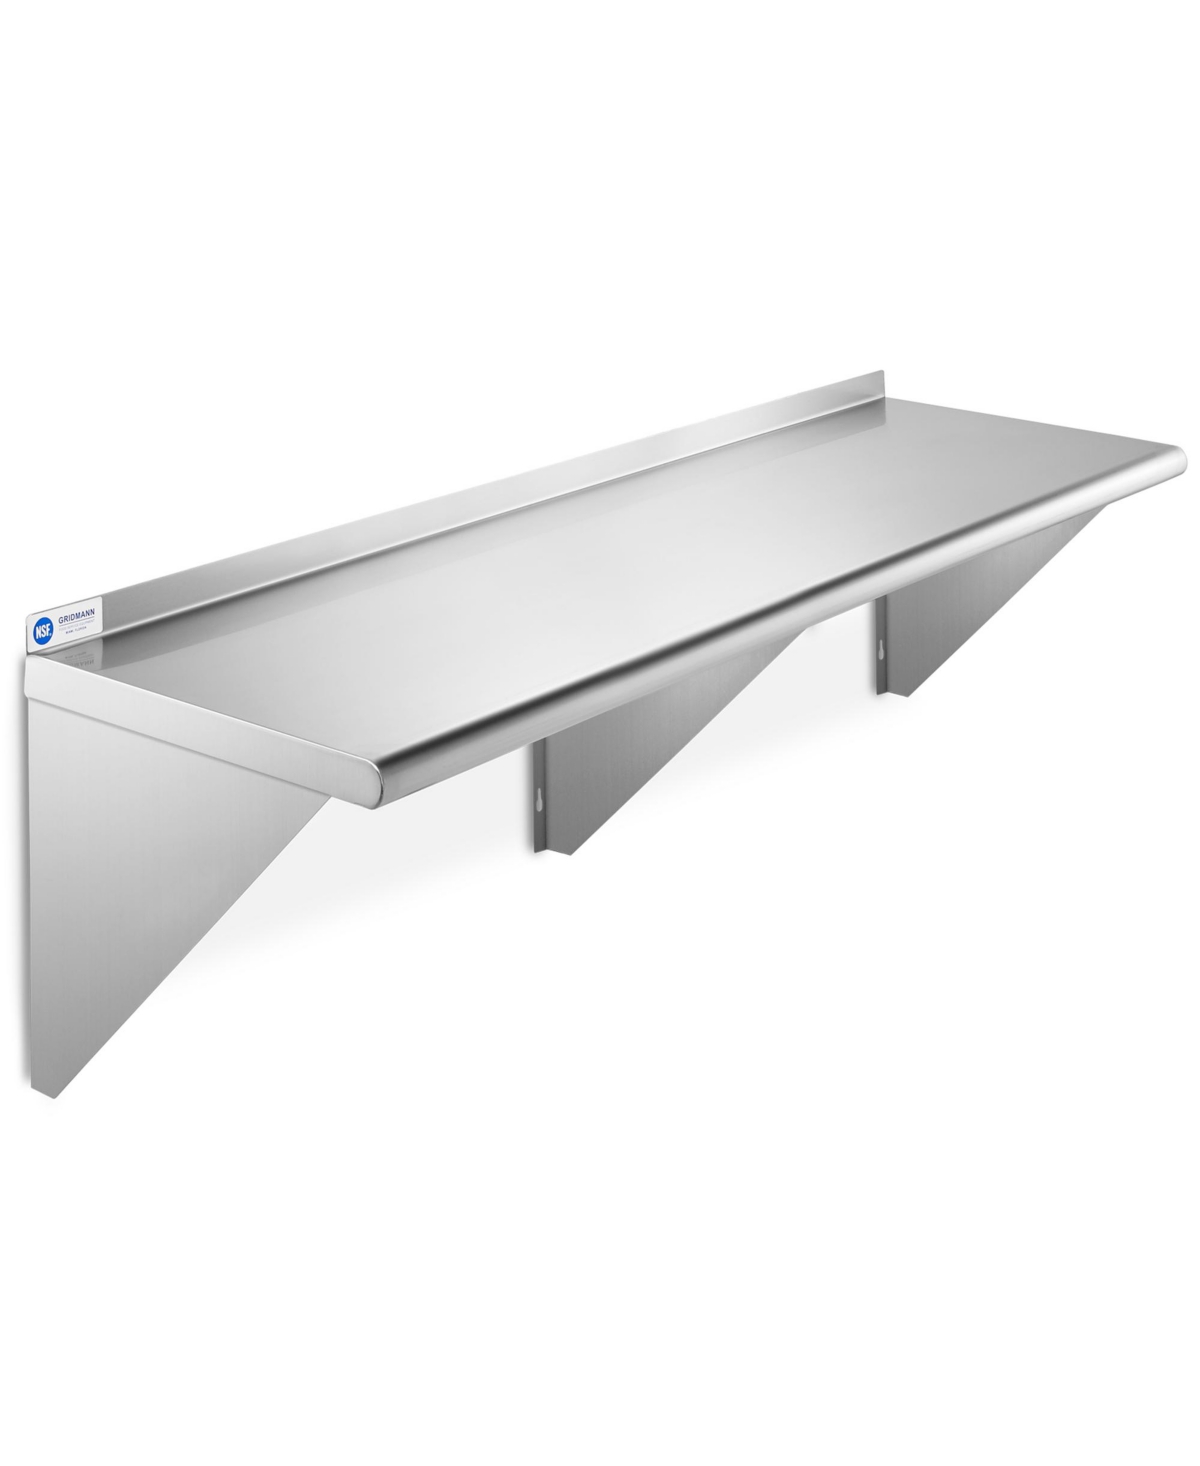 18" x 60" Nsf Stainless Steel Kitchen Wall Mount Shelf w/ Backsplash - Silver